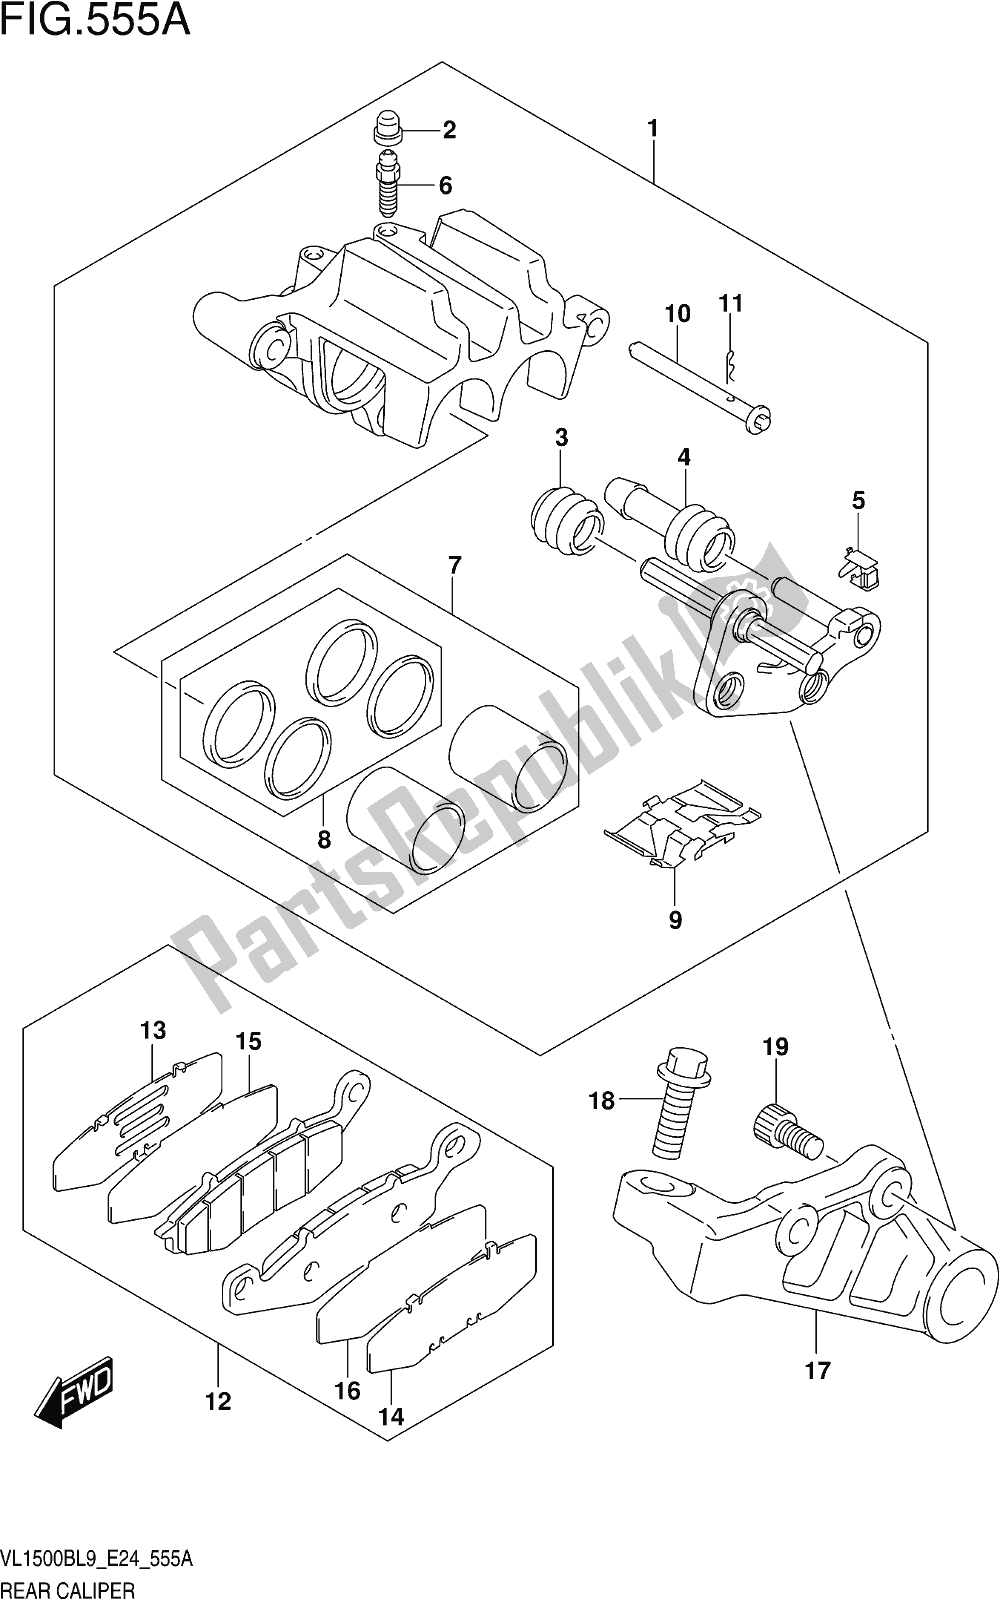 All parts for the Fig. 555a Rear Caliper of the Suzuki VL 1500B 2019